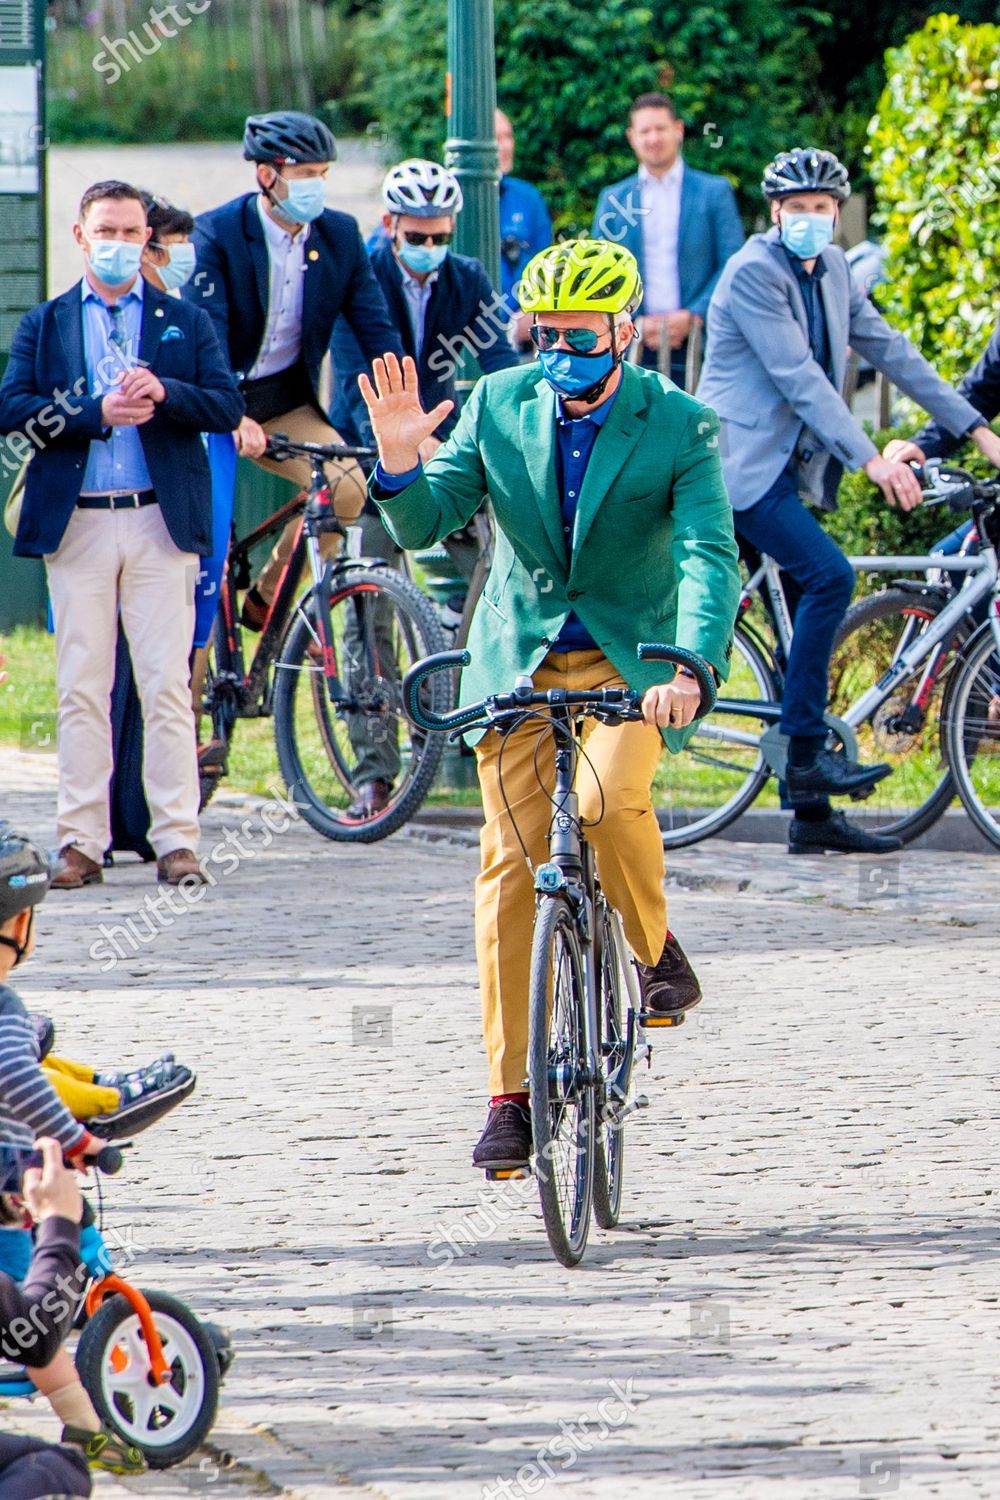 belgian-royals-cycle-on-car-free-sunday-brussels-belgium-shutterstock-editorial-10783150ag.jpg